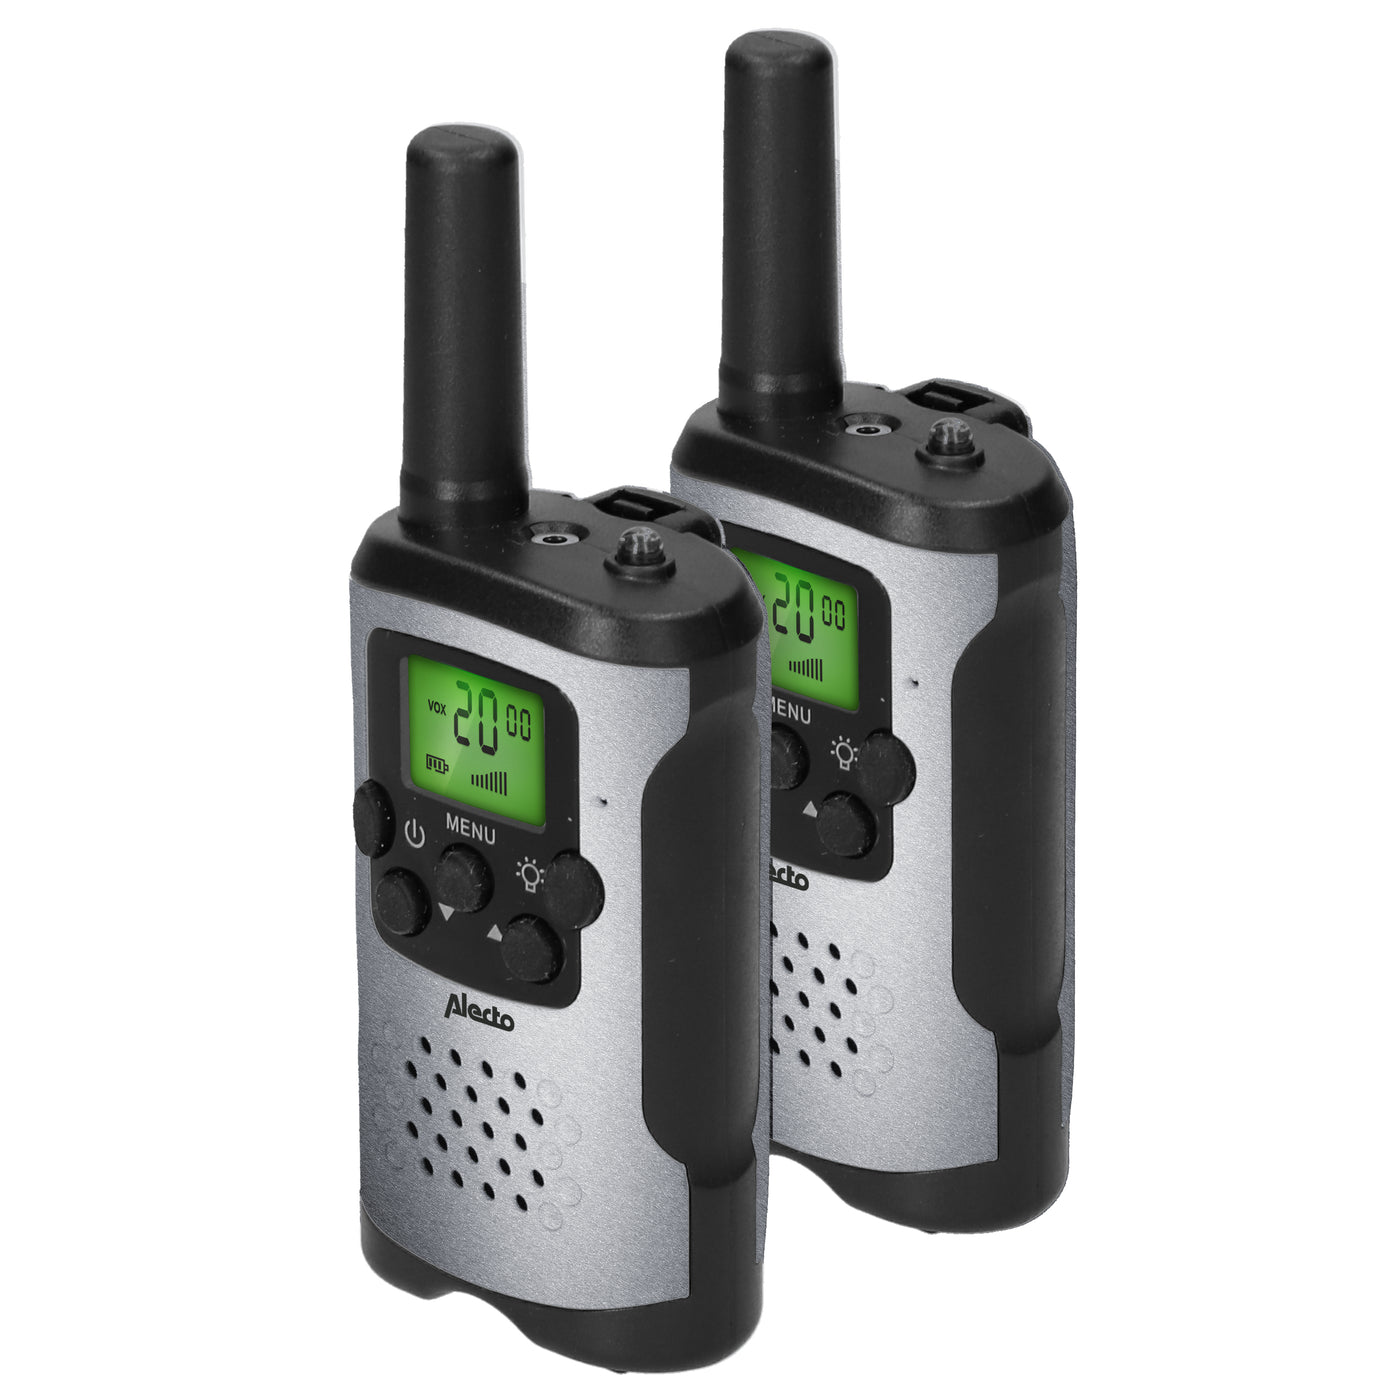 Alecto FR115GS - Set of 2 kids’ Two-Way radios - range up to 5 kilometers - gray/black